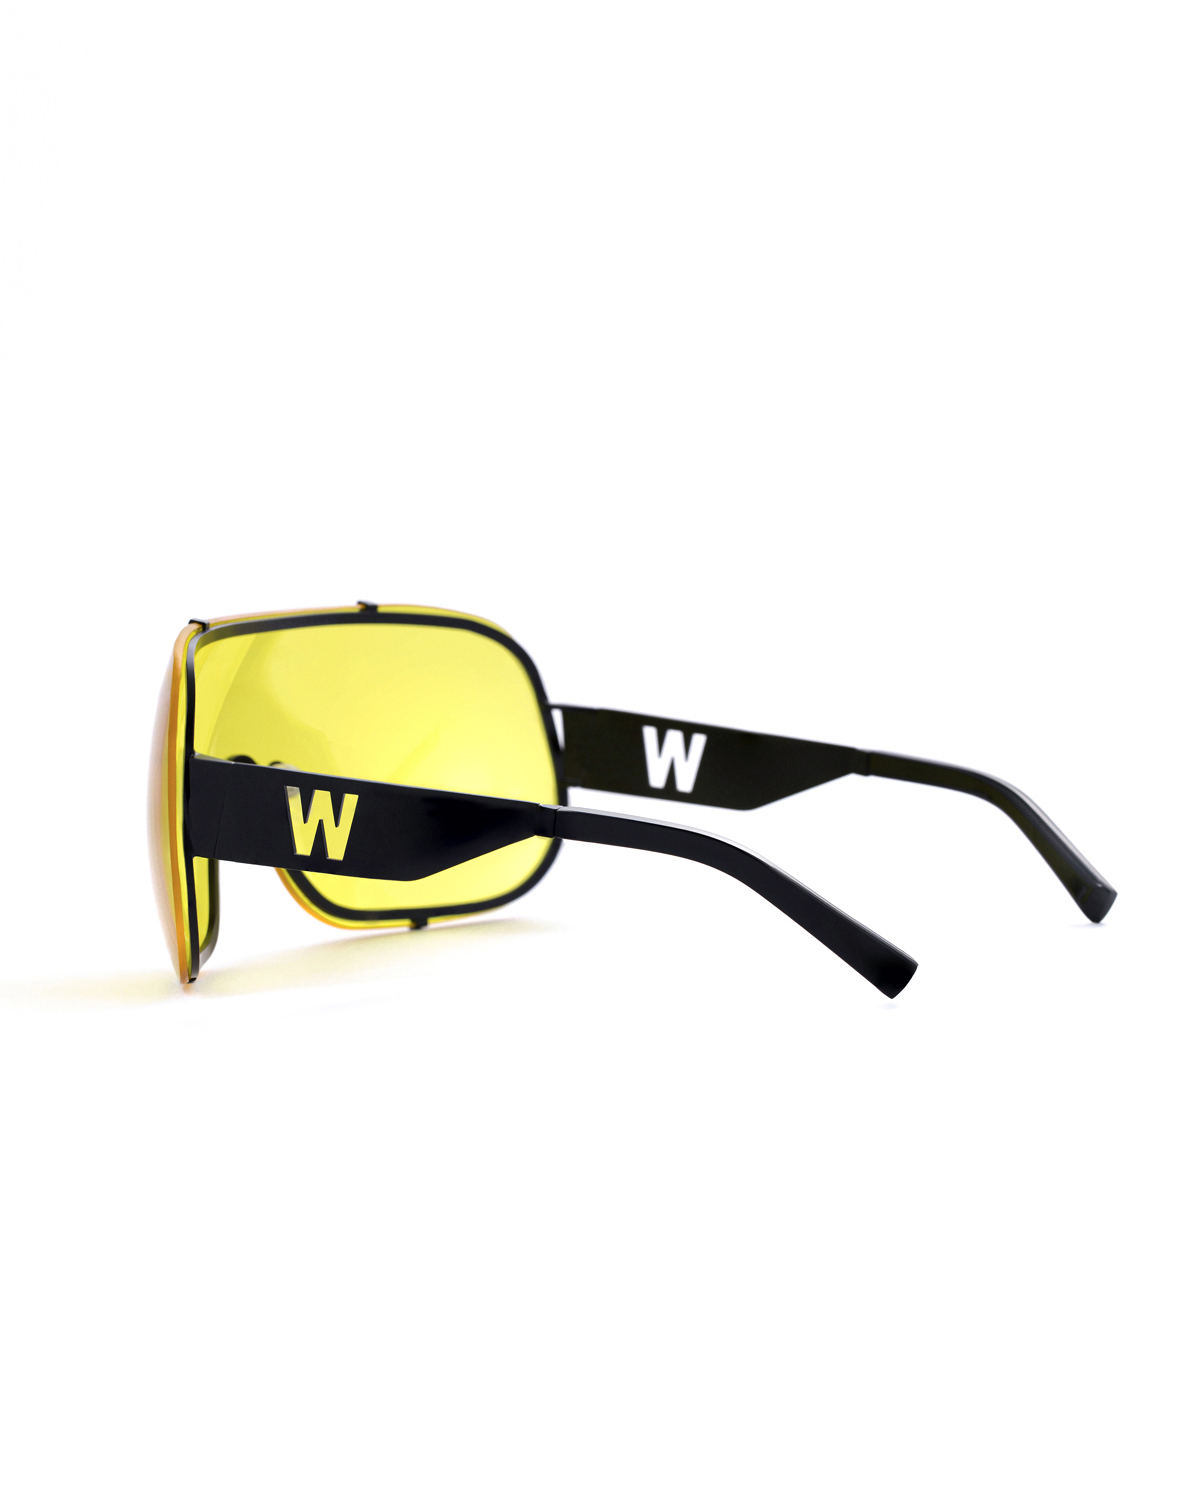 FAKBYFAK x Walter Van Beirendonck  BlitZ Solar Shield Sunglasses. Yellow Code: FBF-23-01-01